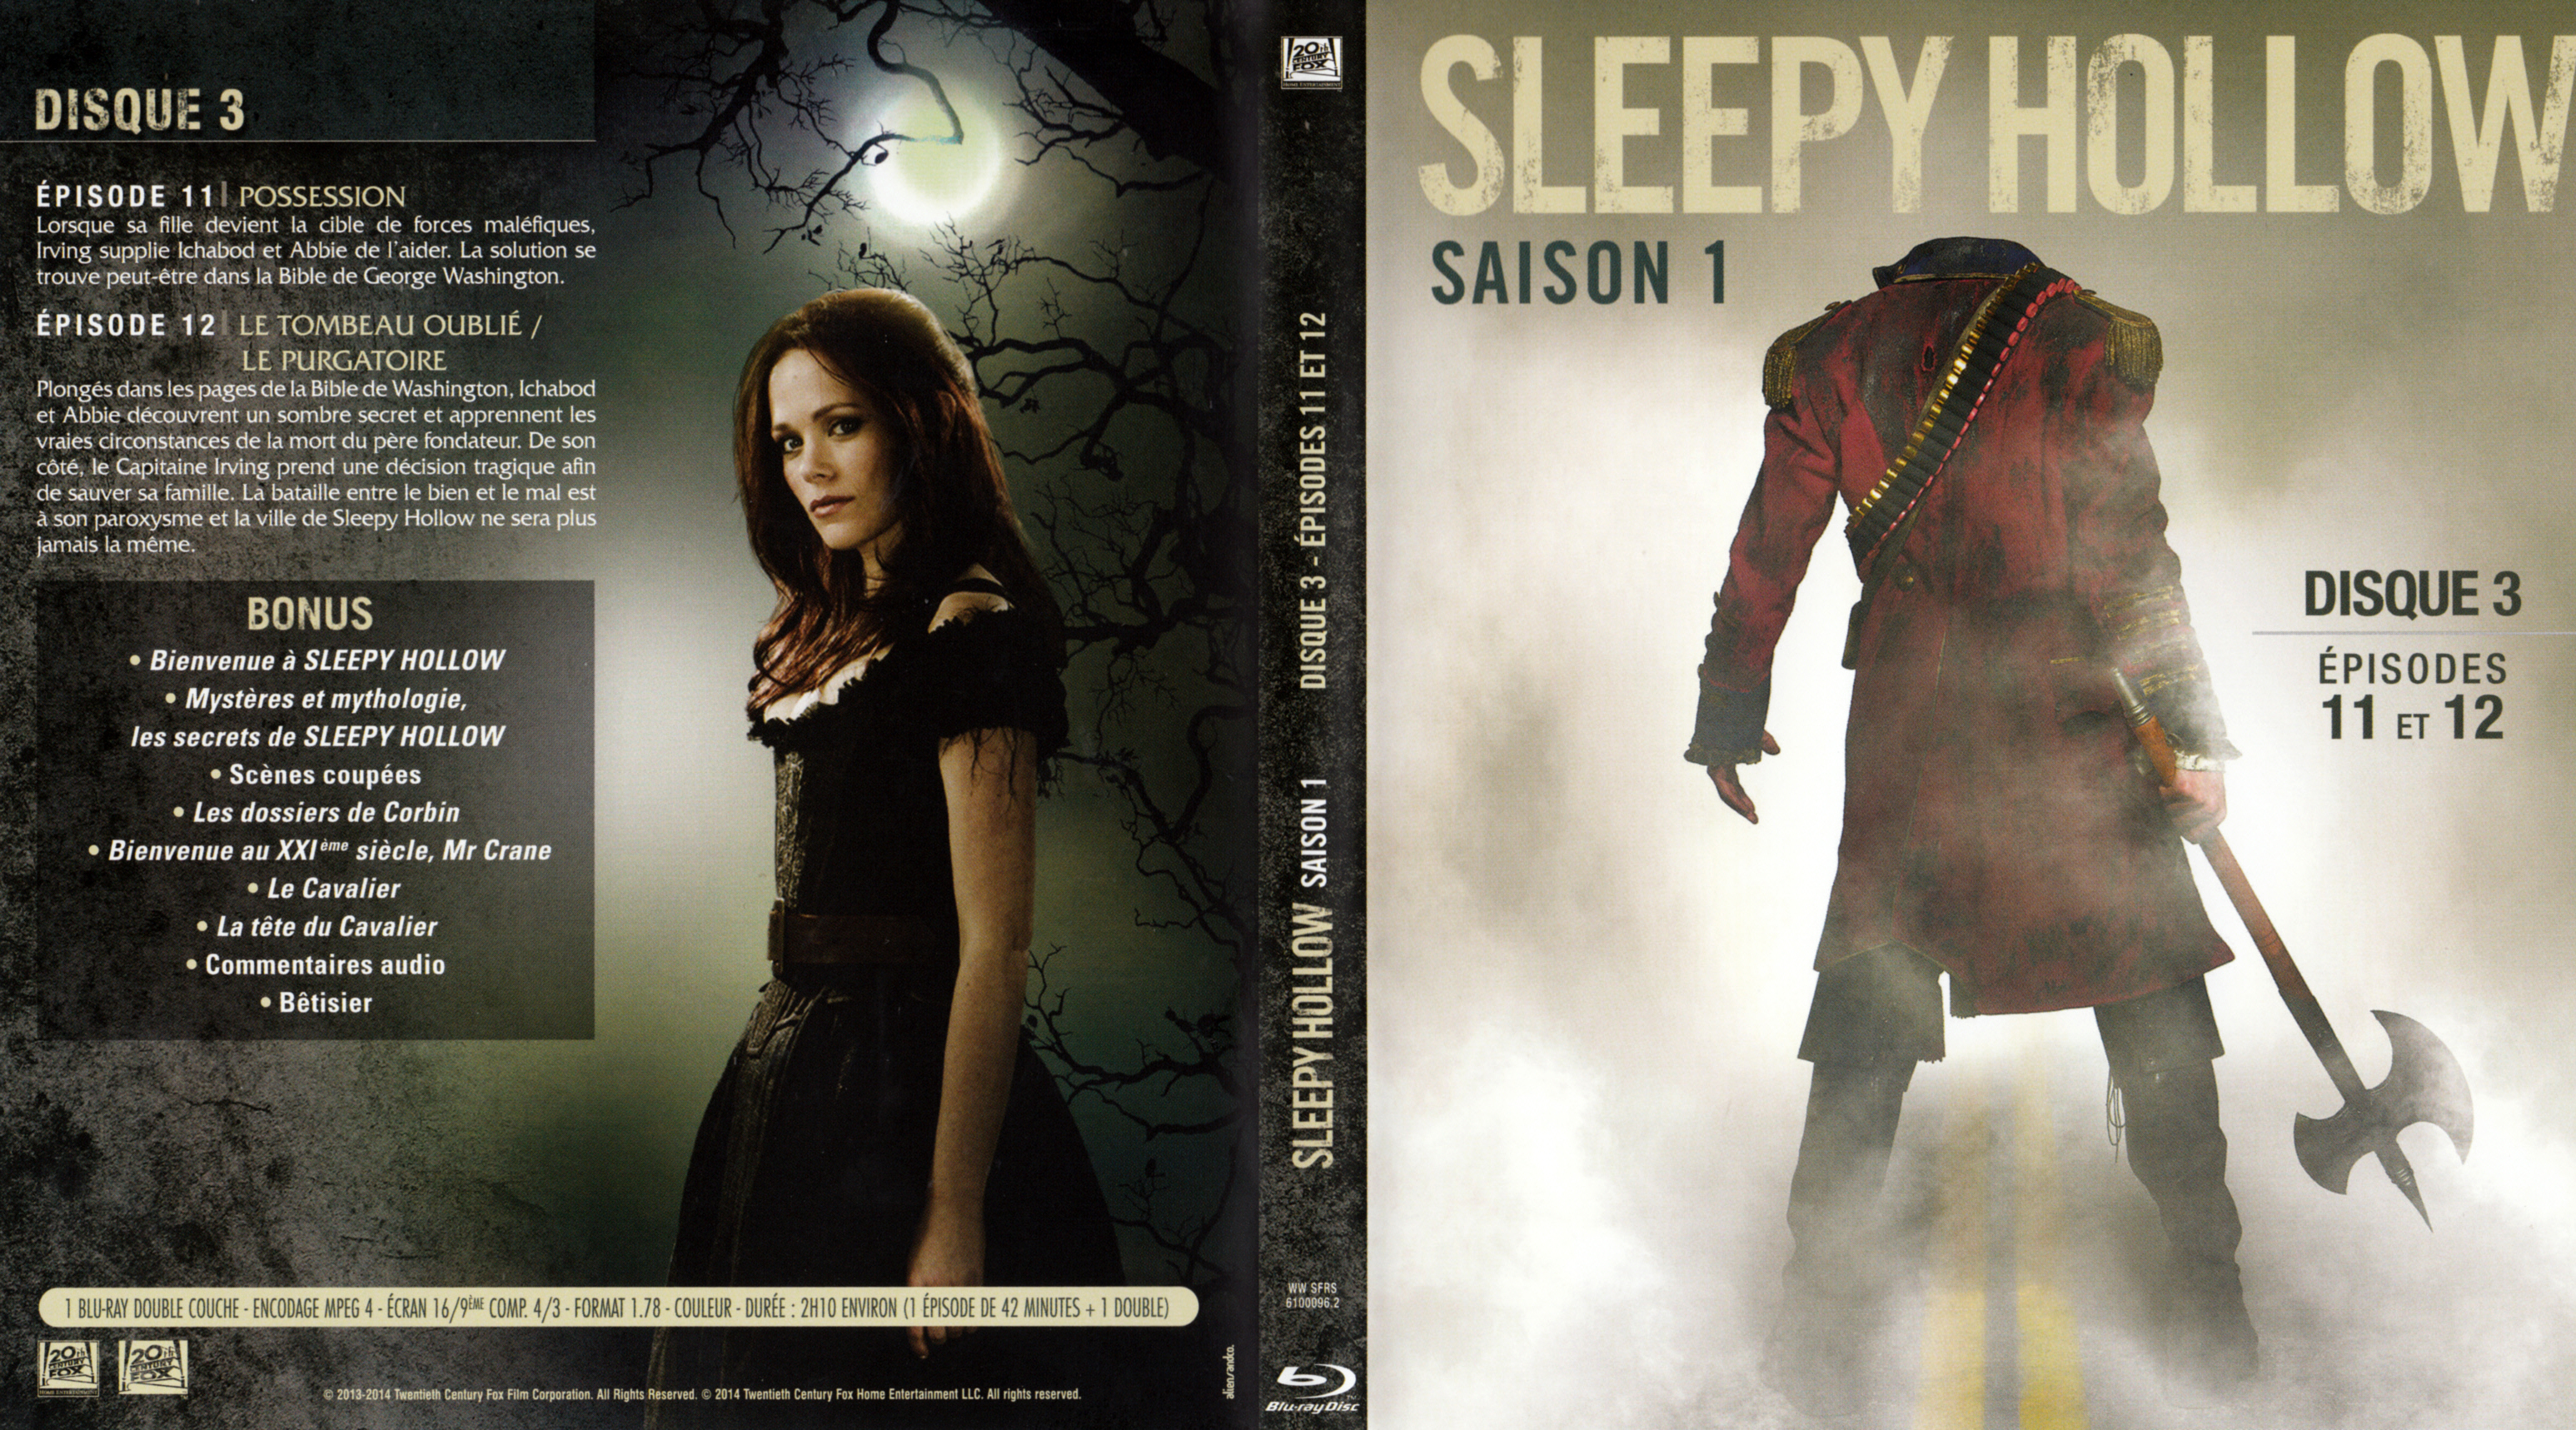 Jaquette DVD Sleepy hollow Saison 1 DISC 3 (BLU-RAY)